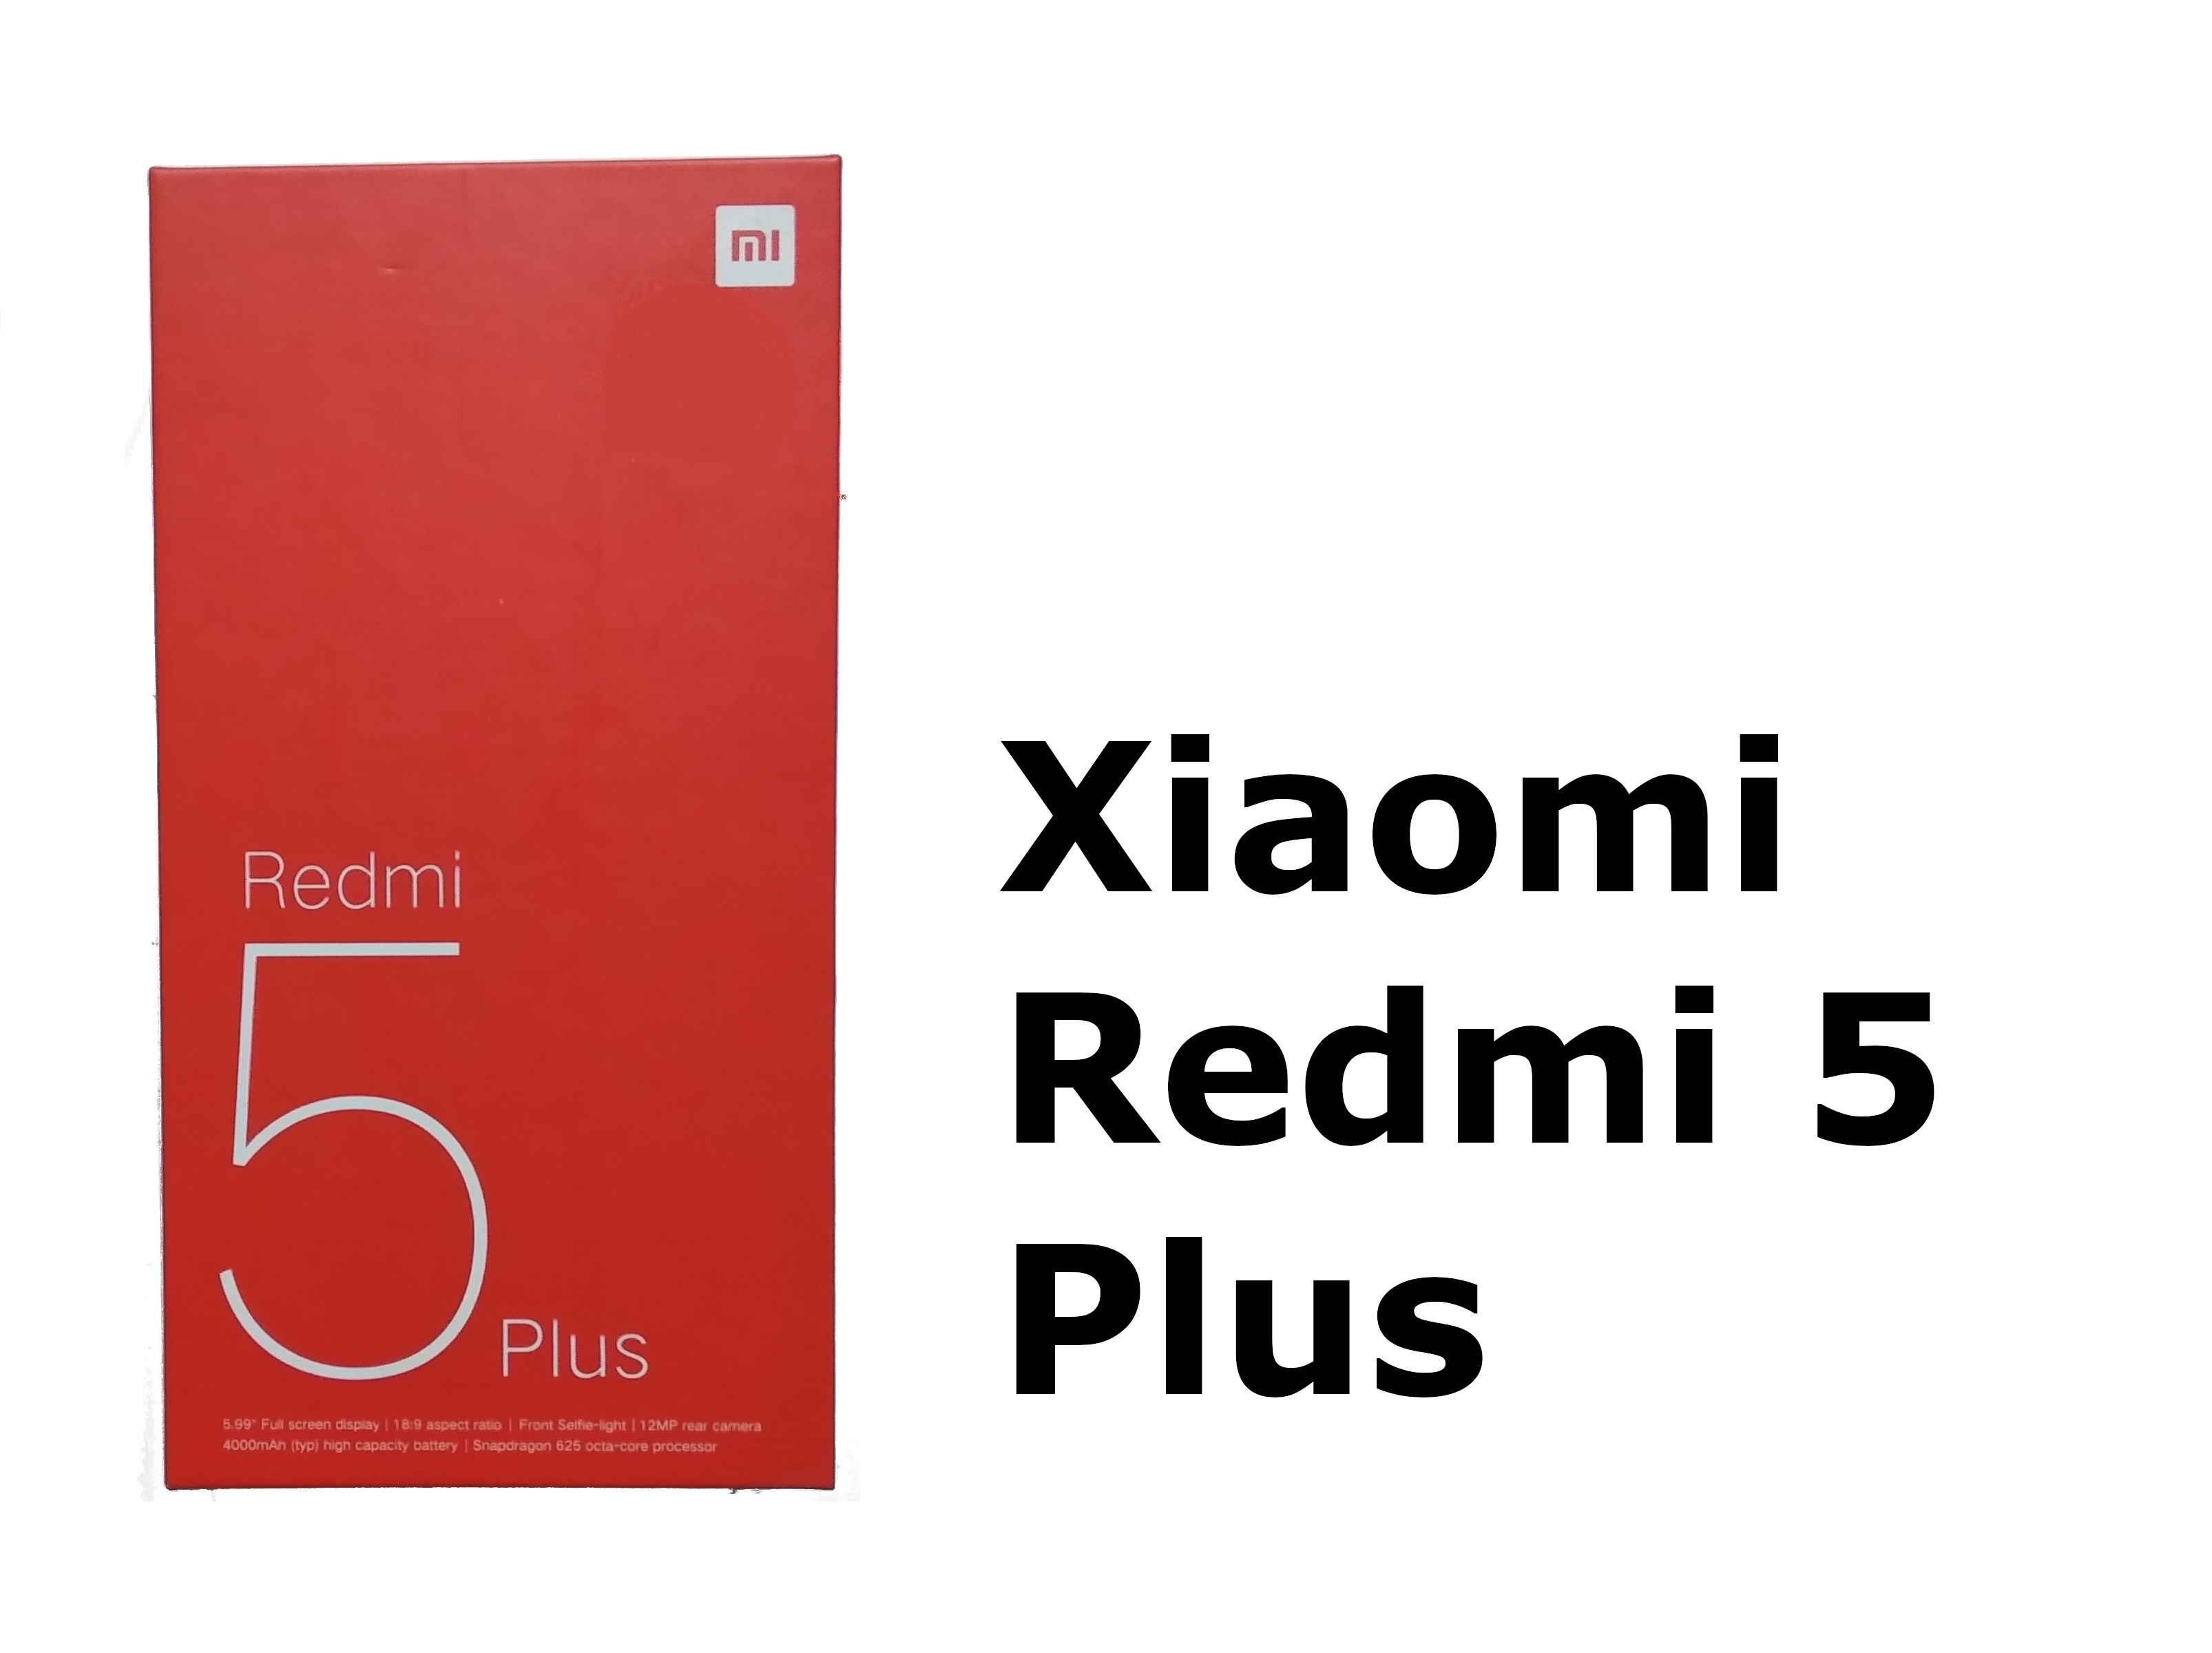 Xiaomi シャオミ のスマホ Redmi 5 Plus の使用レビュー1 動作スピード 耐久性の評価 カワロク カワのお役立ちノート